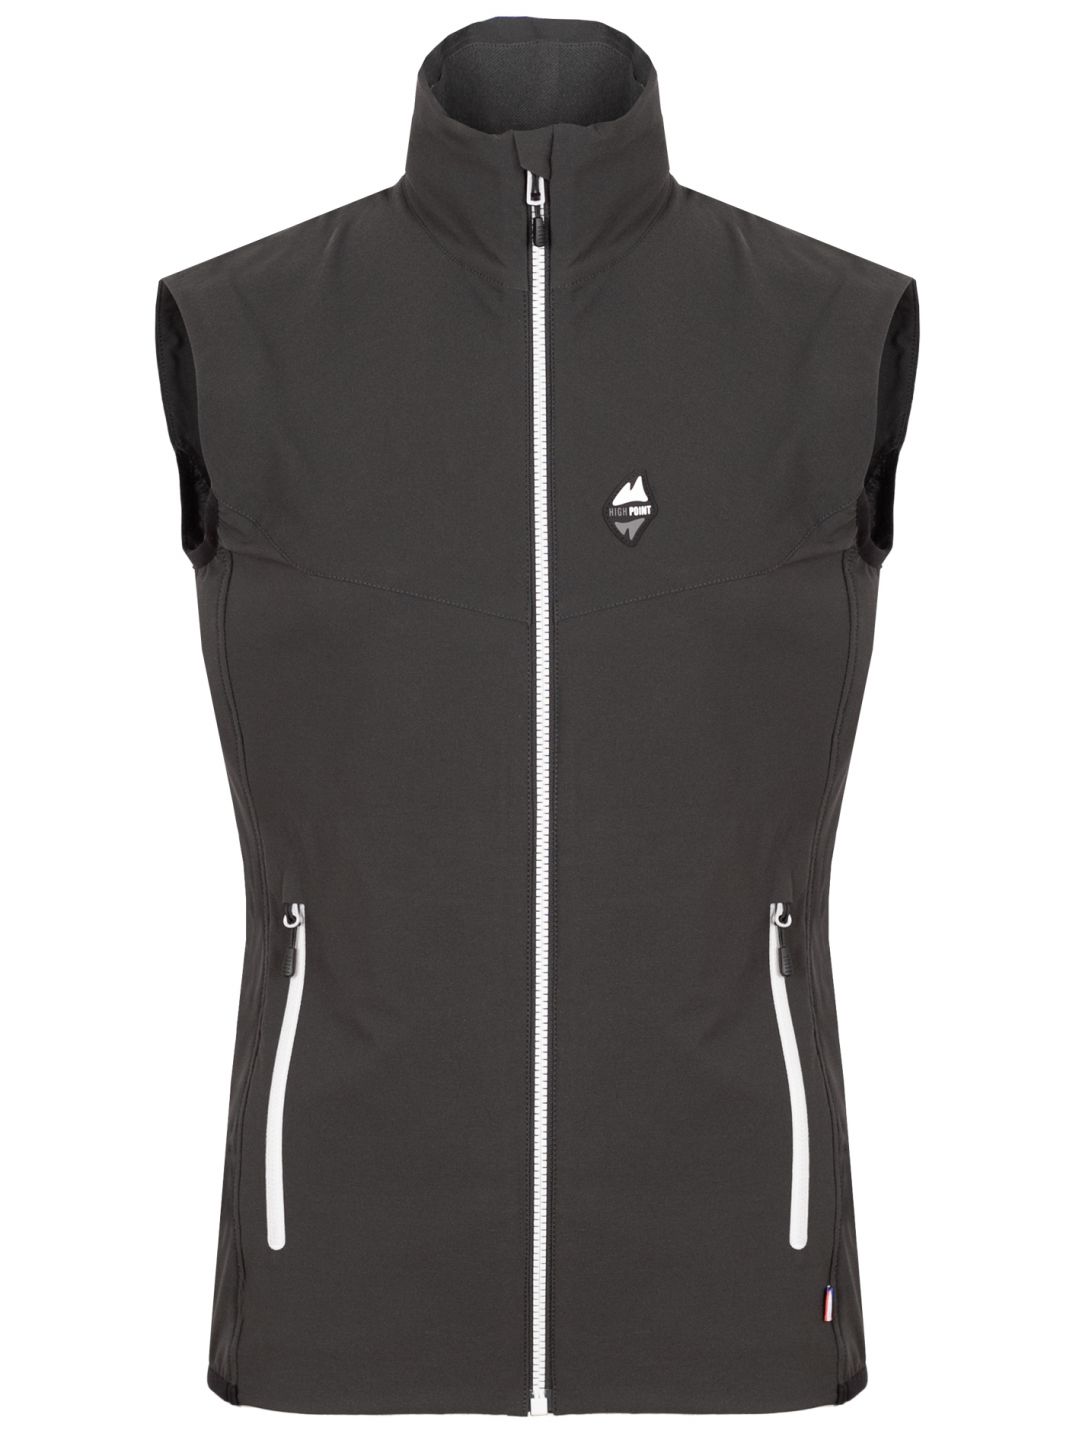 HIGH POINT Atom Lady Vest Black varianta: L